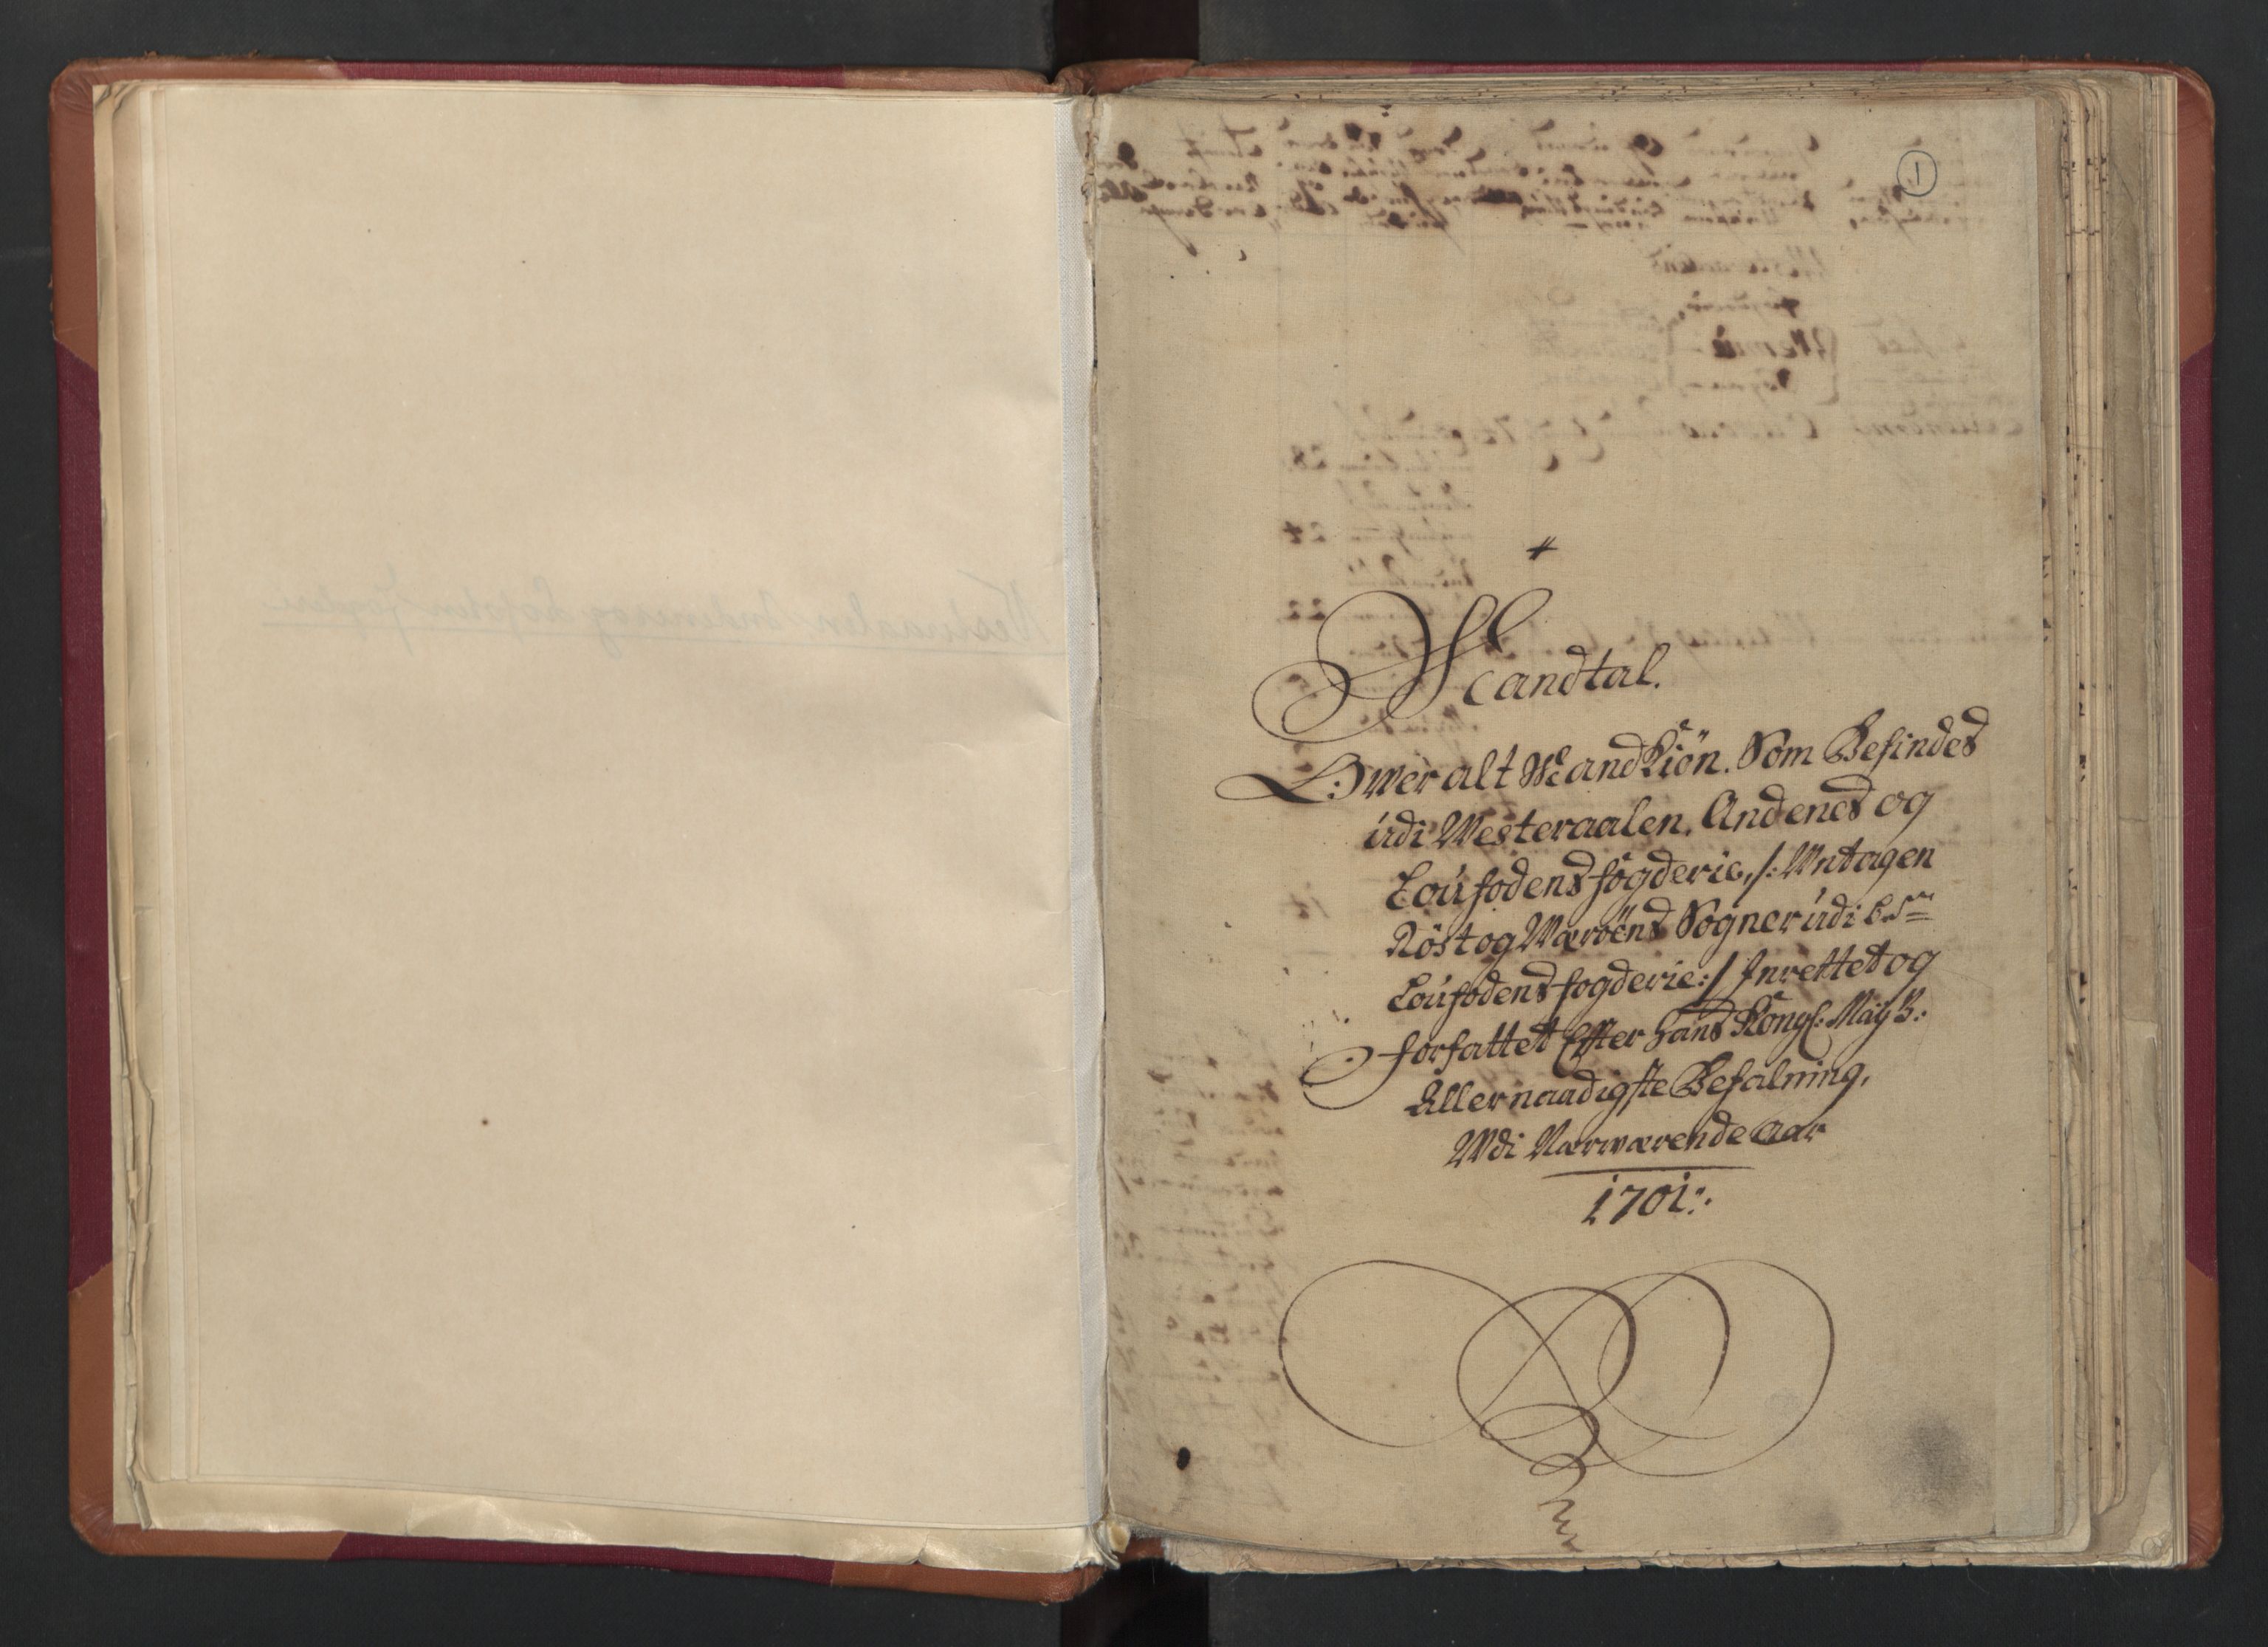 RA, Manntallet 1701, nr. 18: Vesterålen, Andenes og Lofoten fogderi, 1701, s. 1